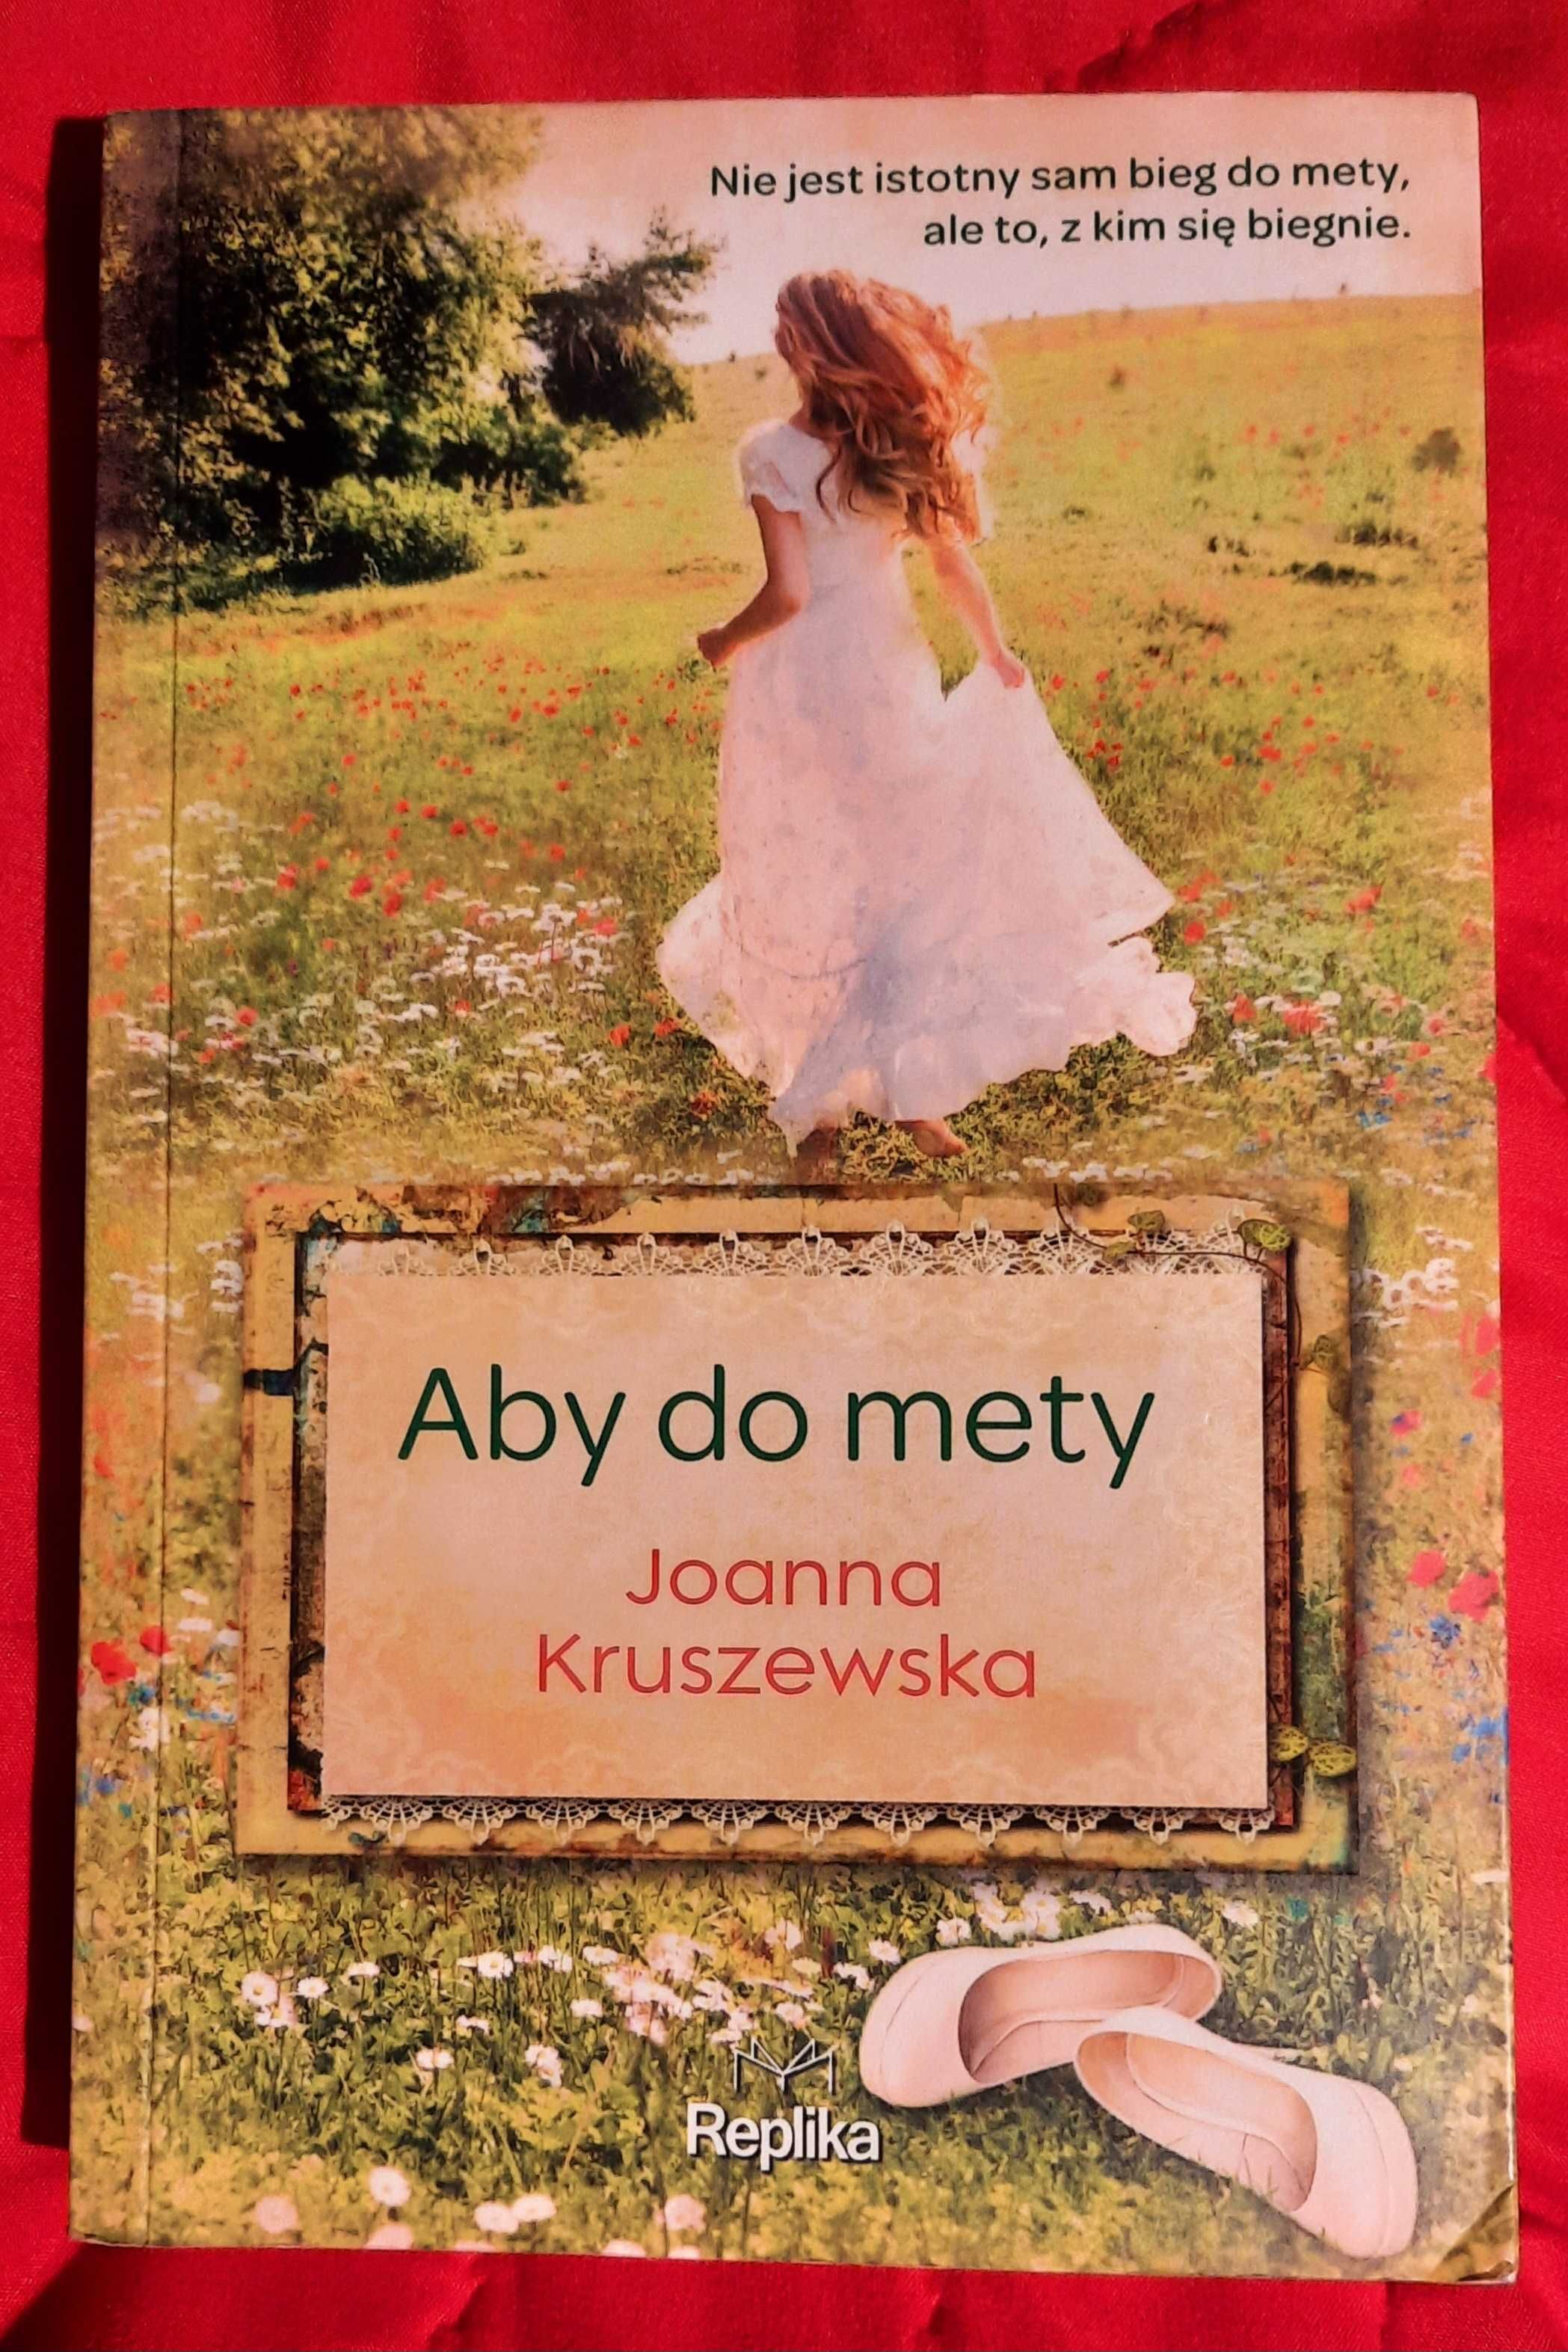 "Aby do mety" - Joanna Kruszewska